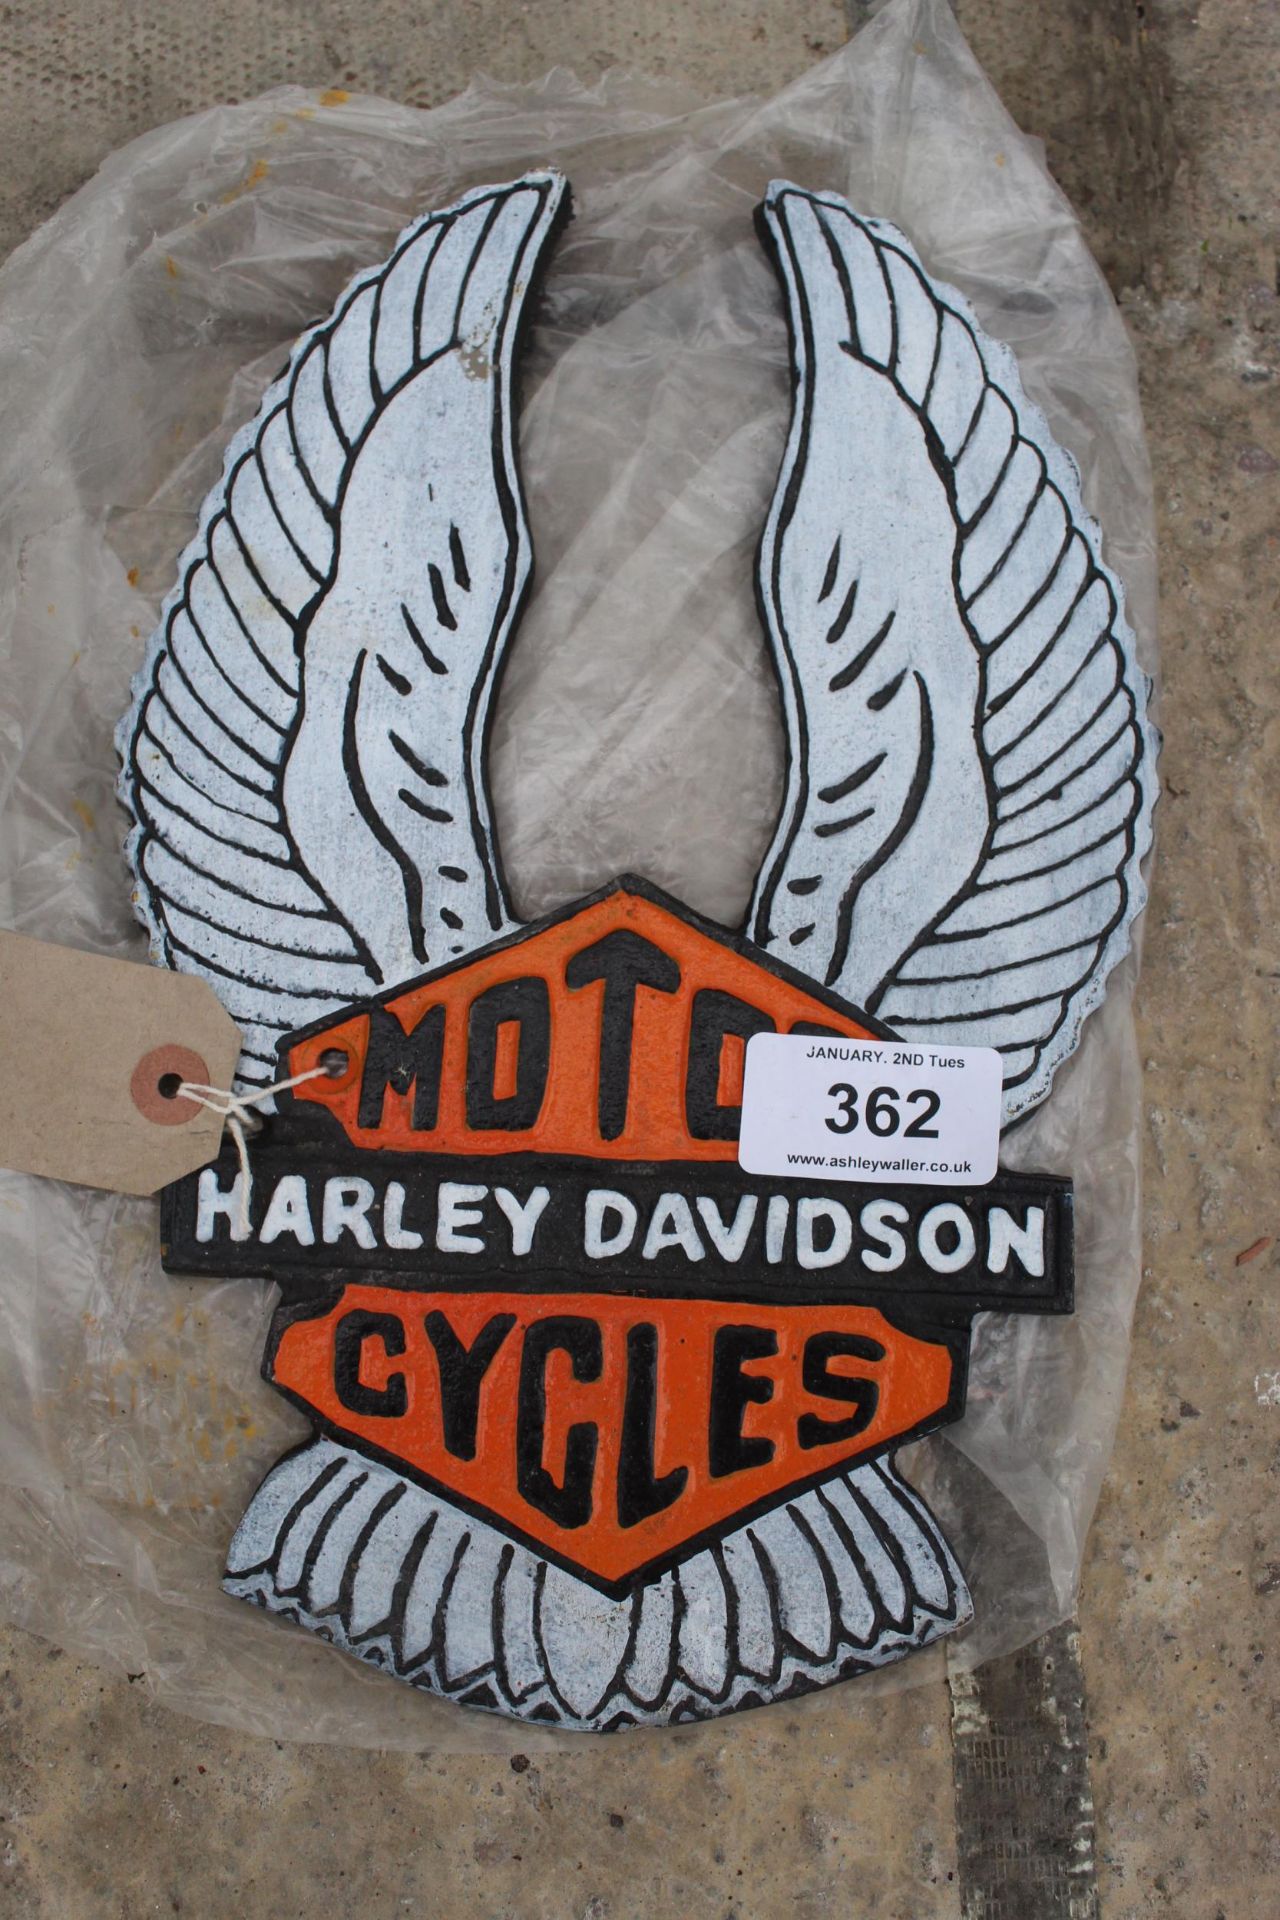 A CAST 'HARLEY DAVIDSON MOTOR CYCLES' SIGN NO VAT